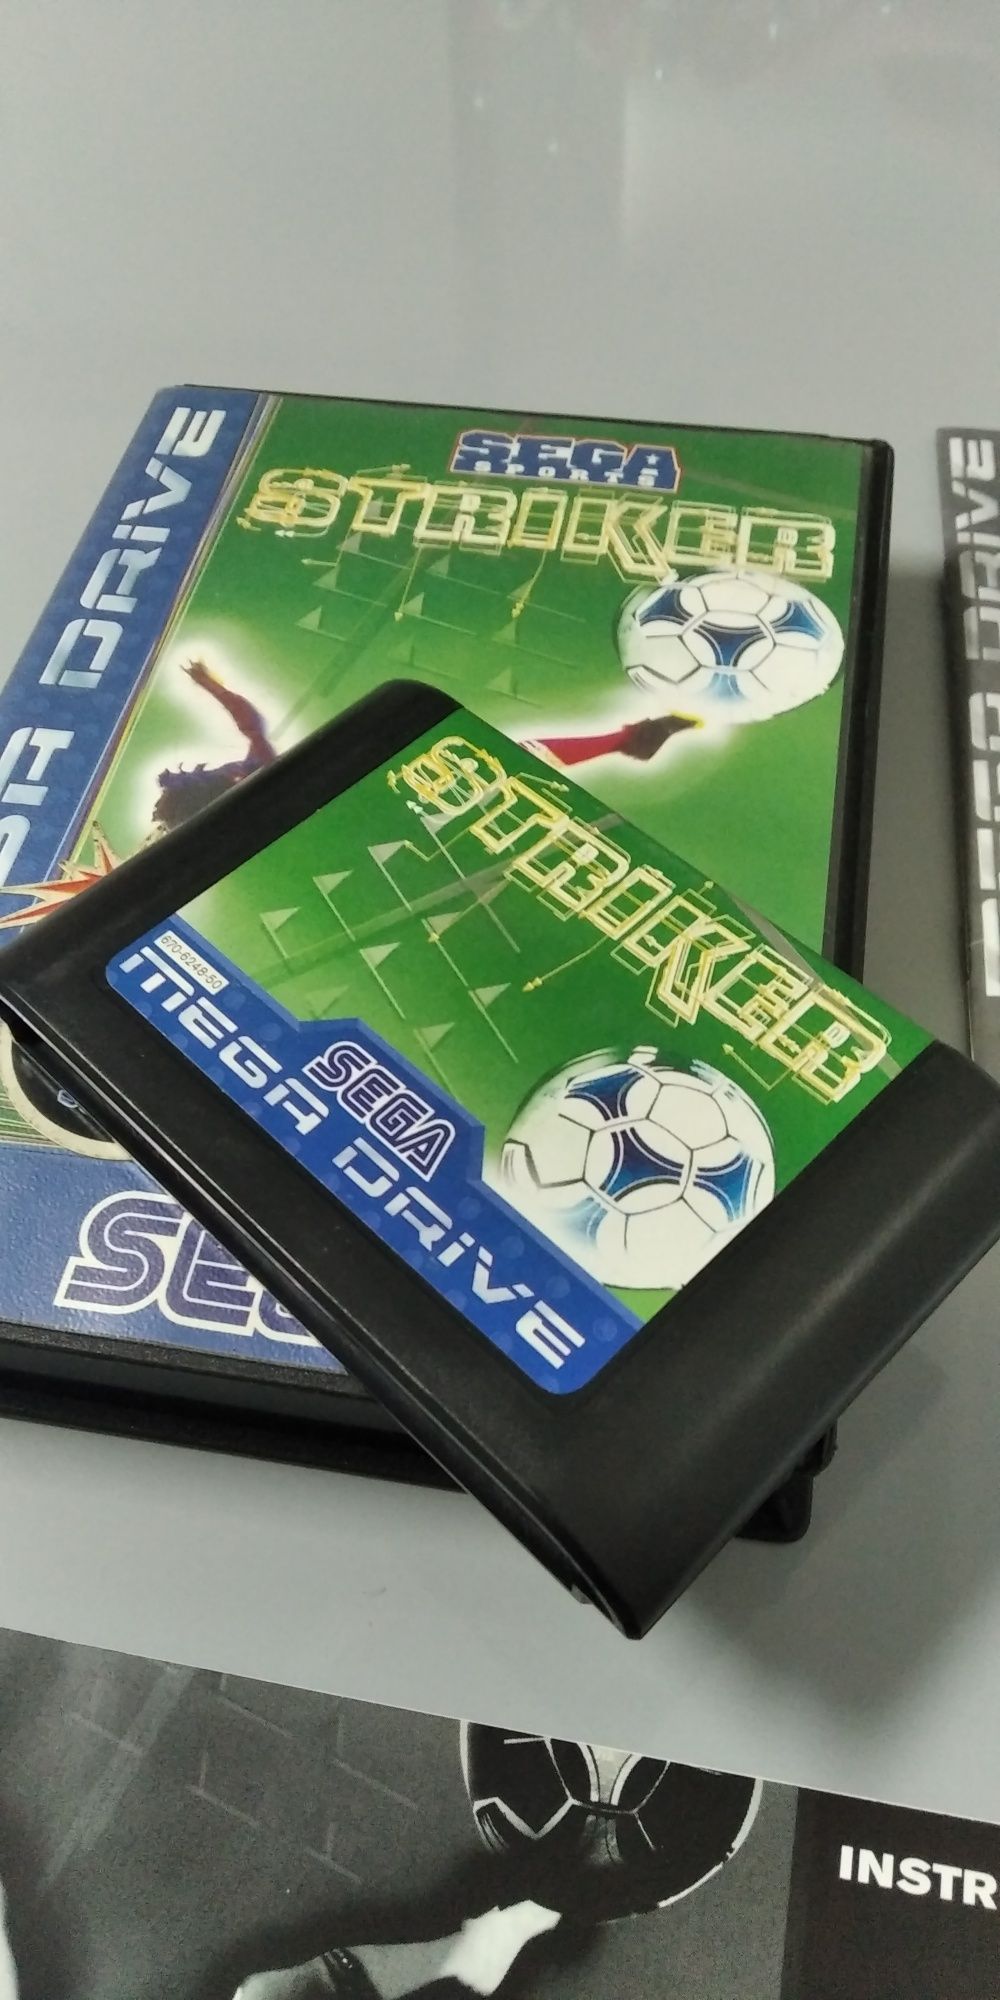 Striker Sega Mega Drive (Portes grátis)